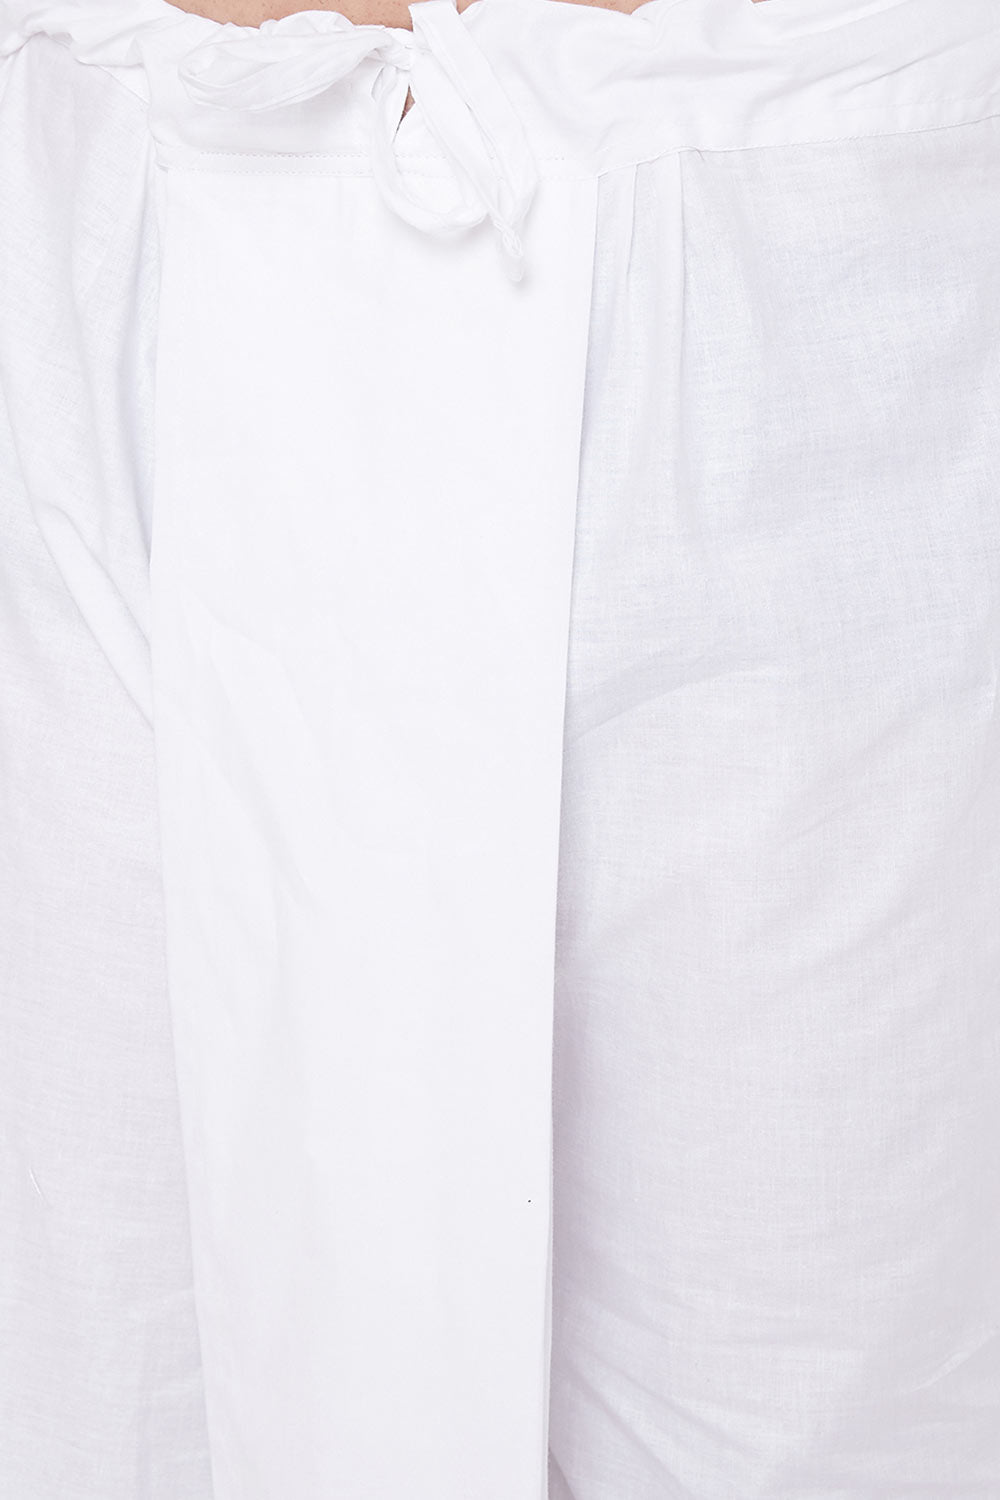 Shop Men's Blended Cotton Kurta and Dhoti Set in White